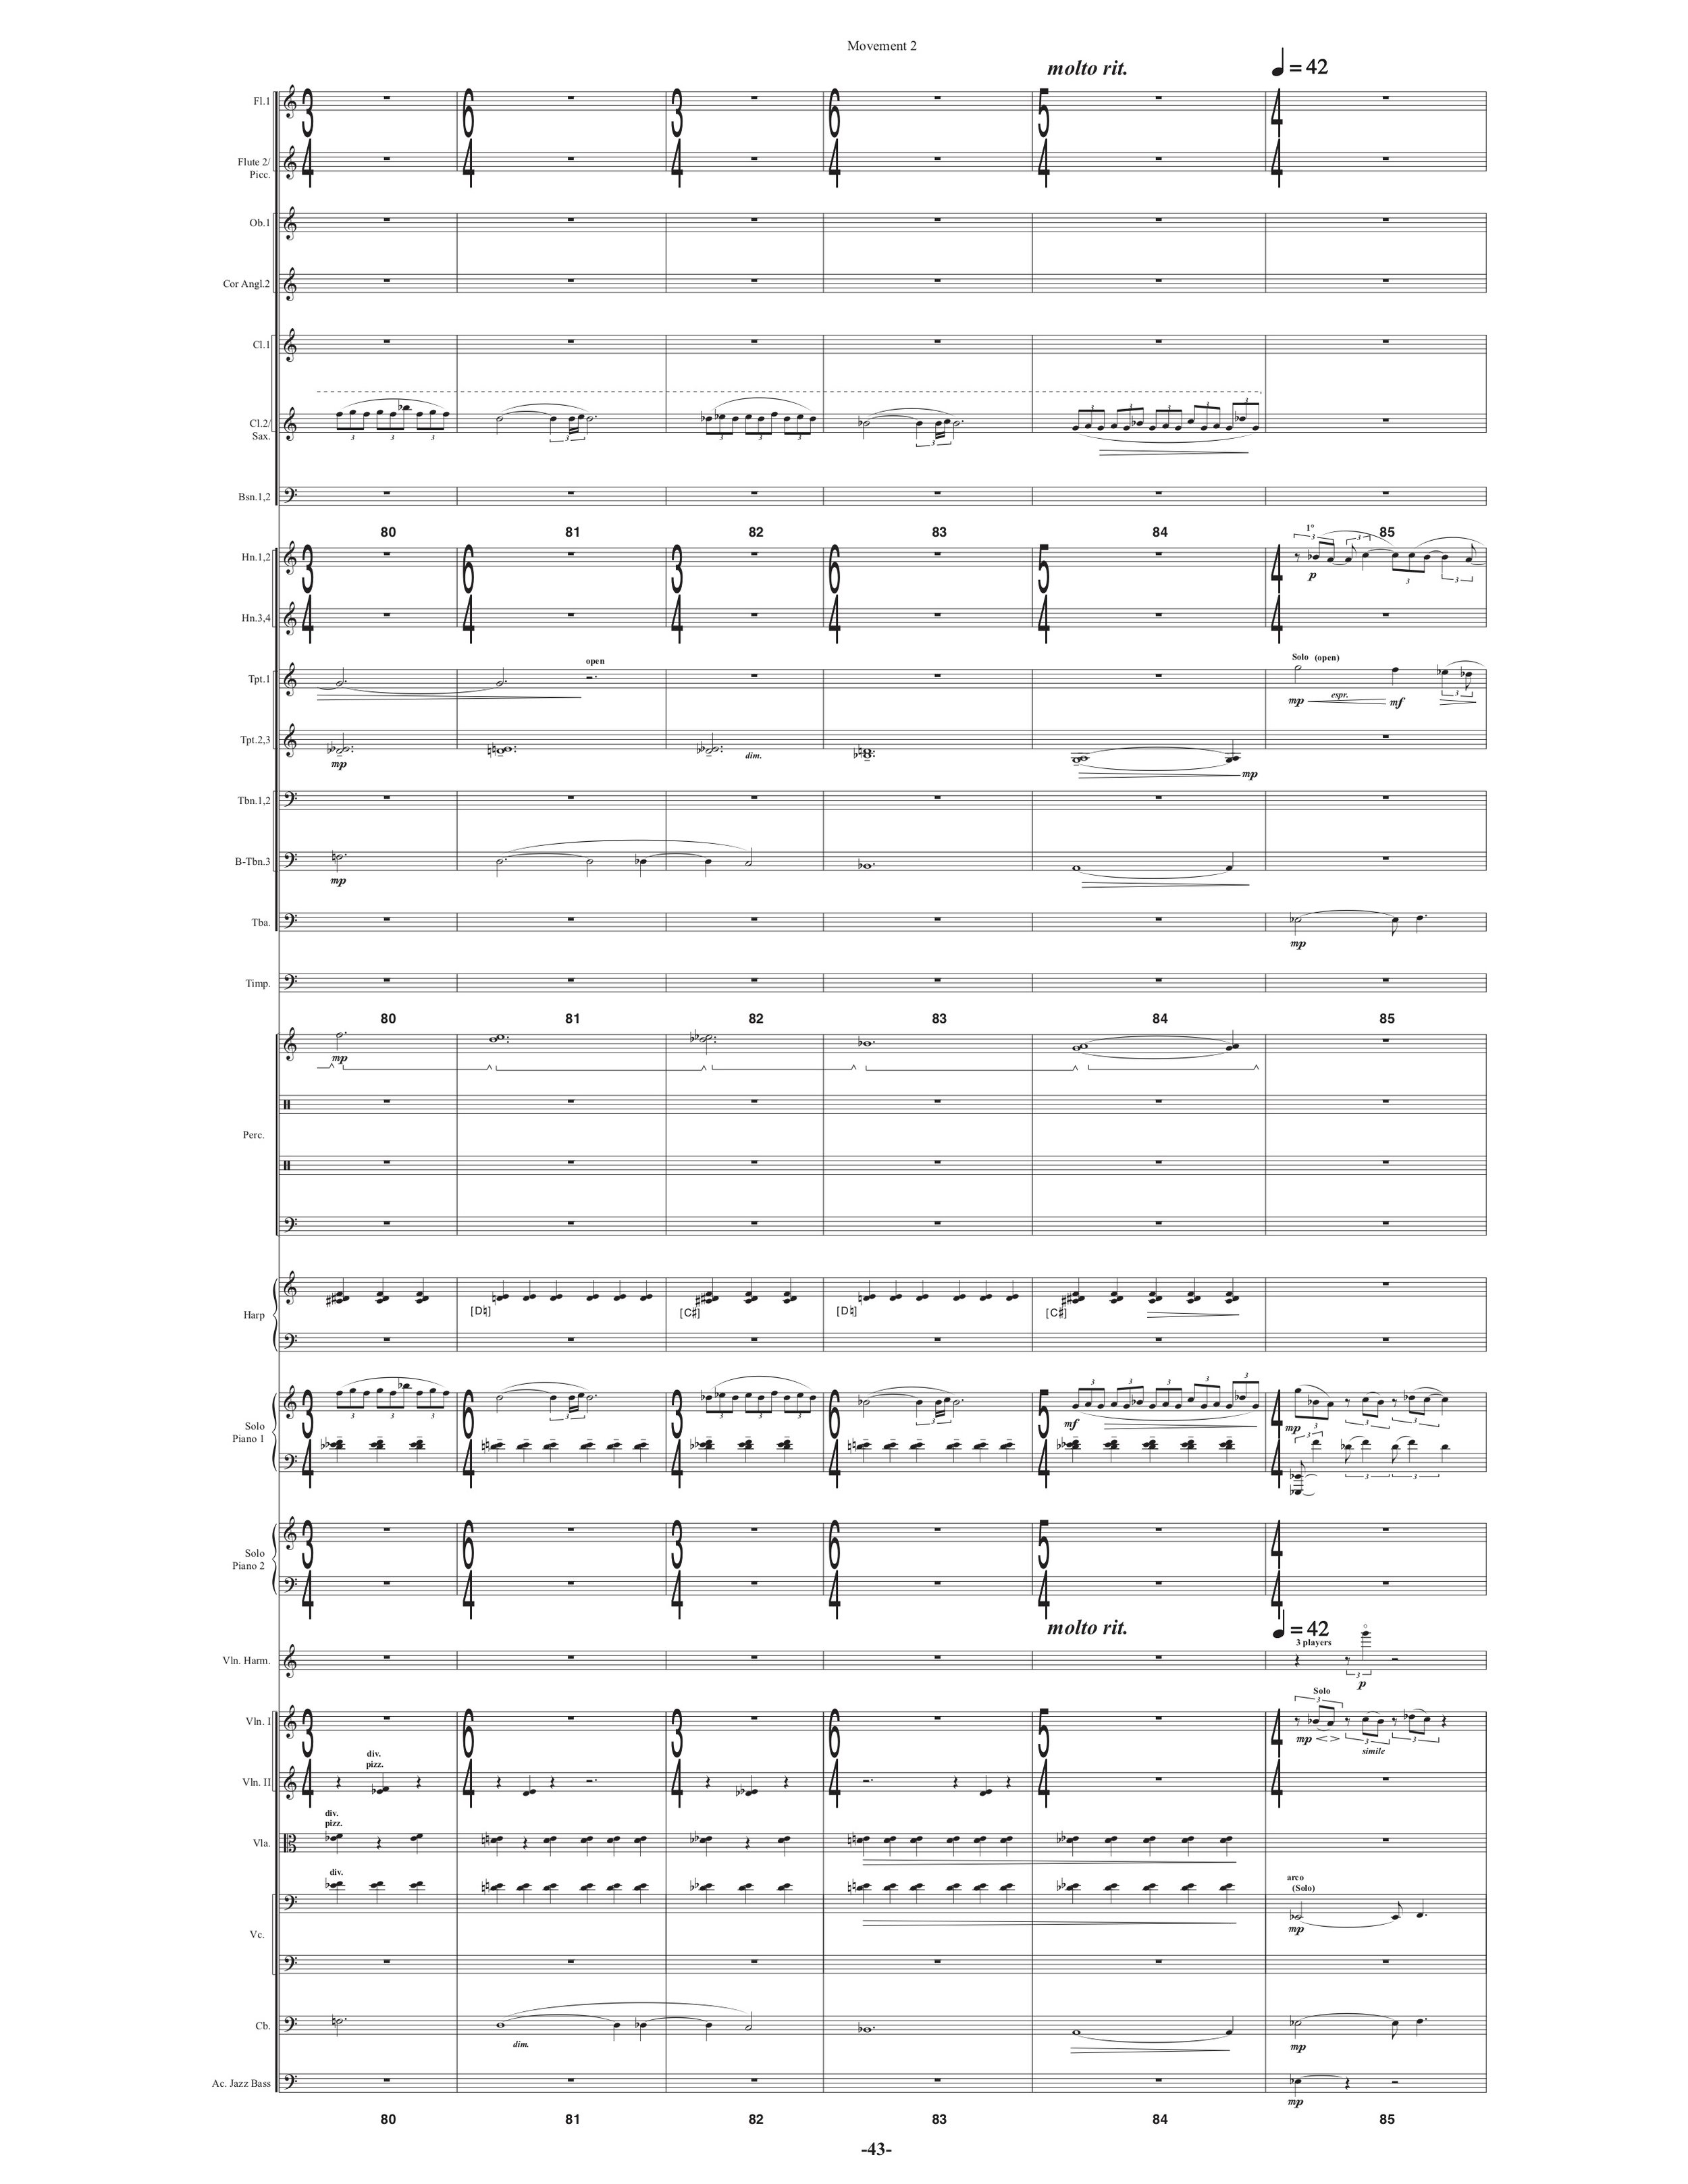 Symphony_Orch & 2 Pianos p48.jpg